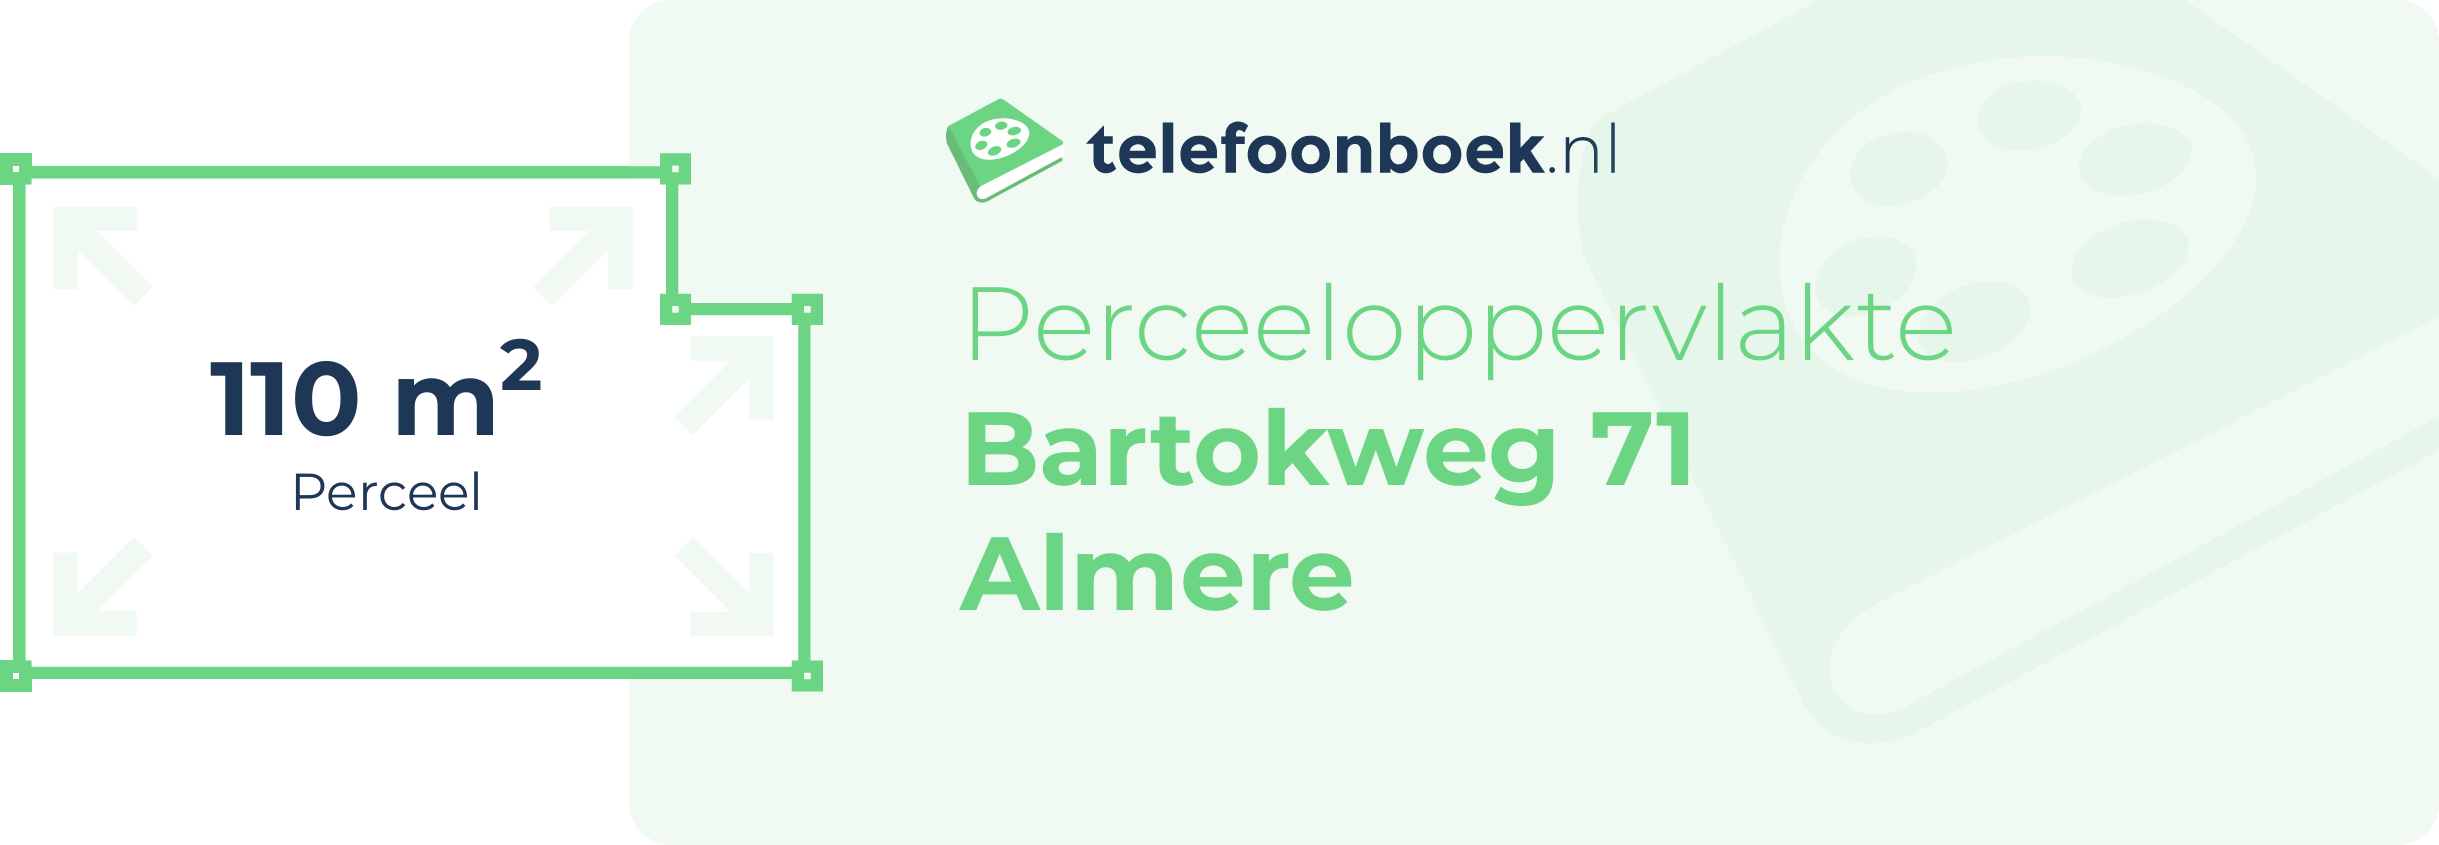 Perceeloppervlakte Bartokweg 71 Almere